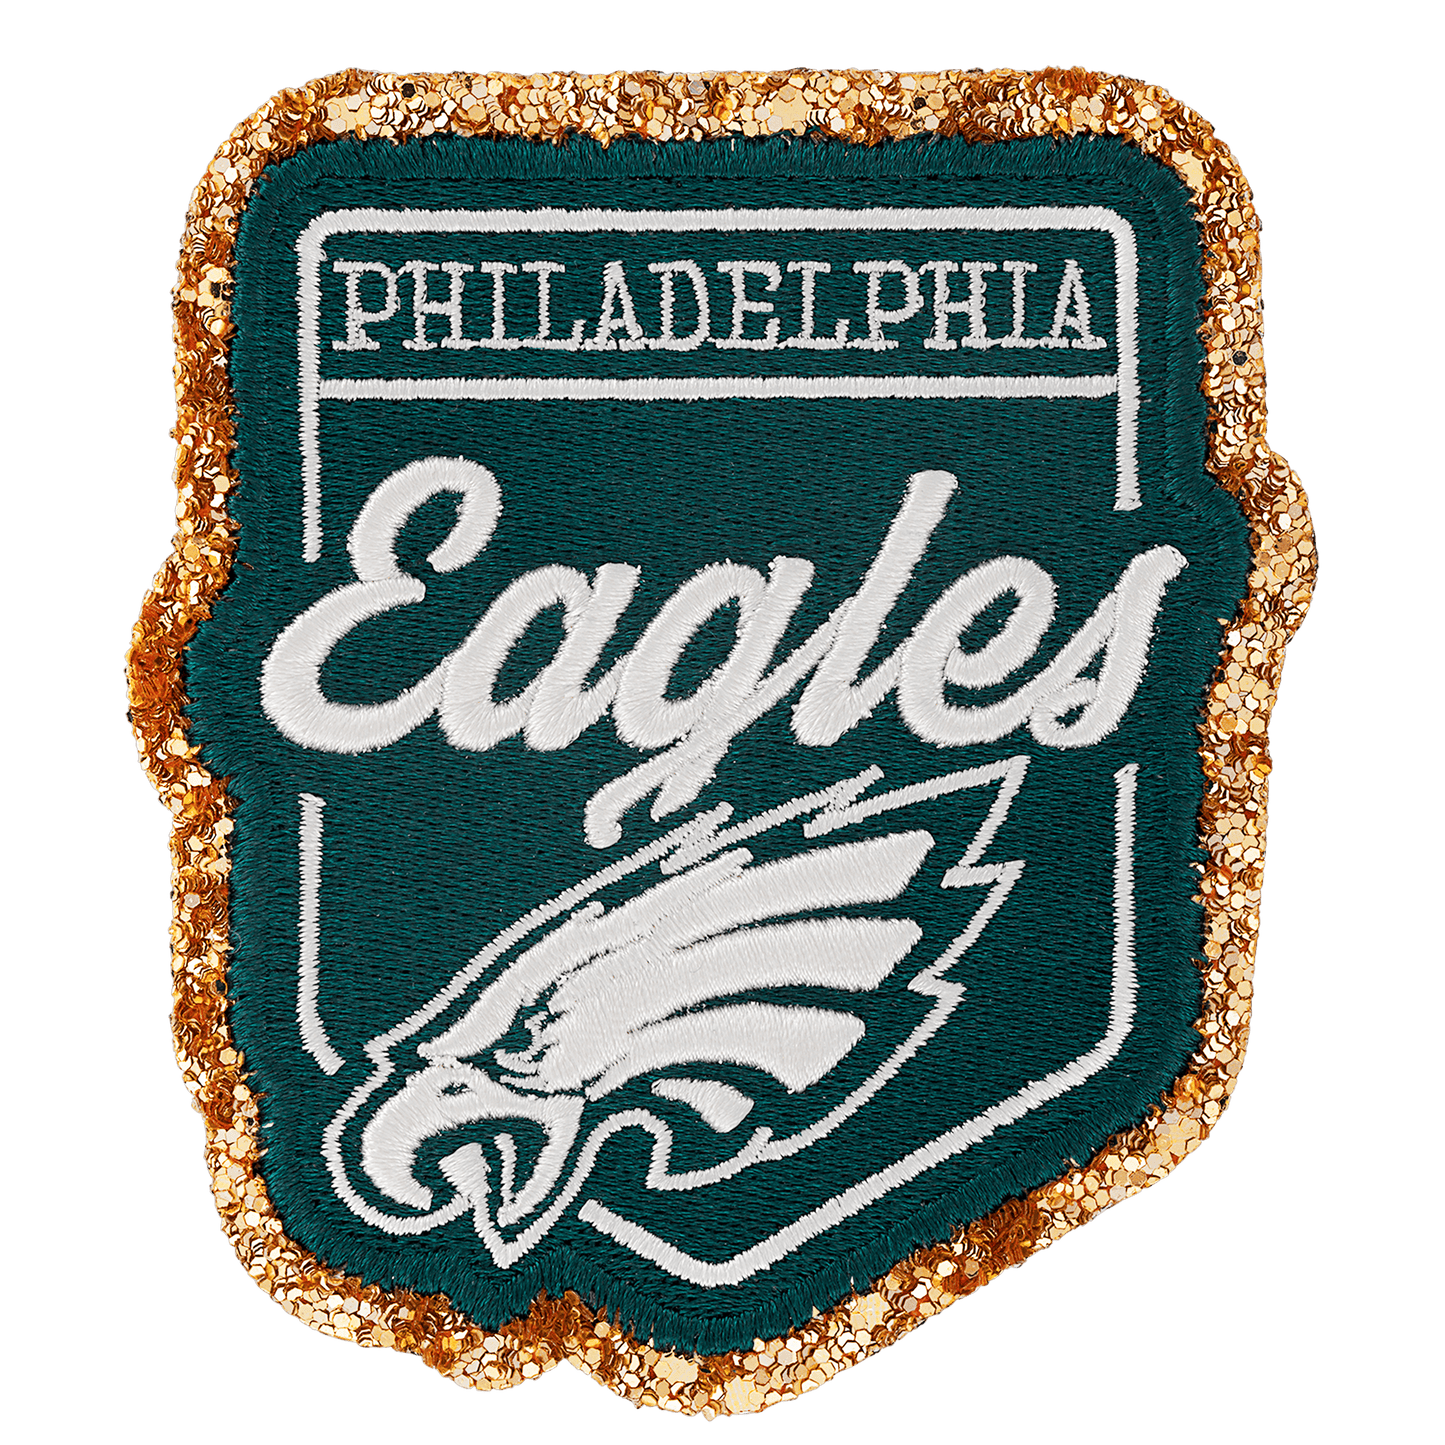 Philadelphia Eagles Patch